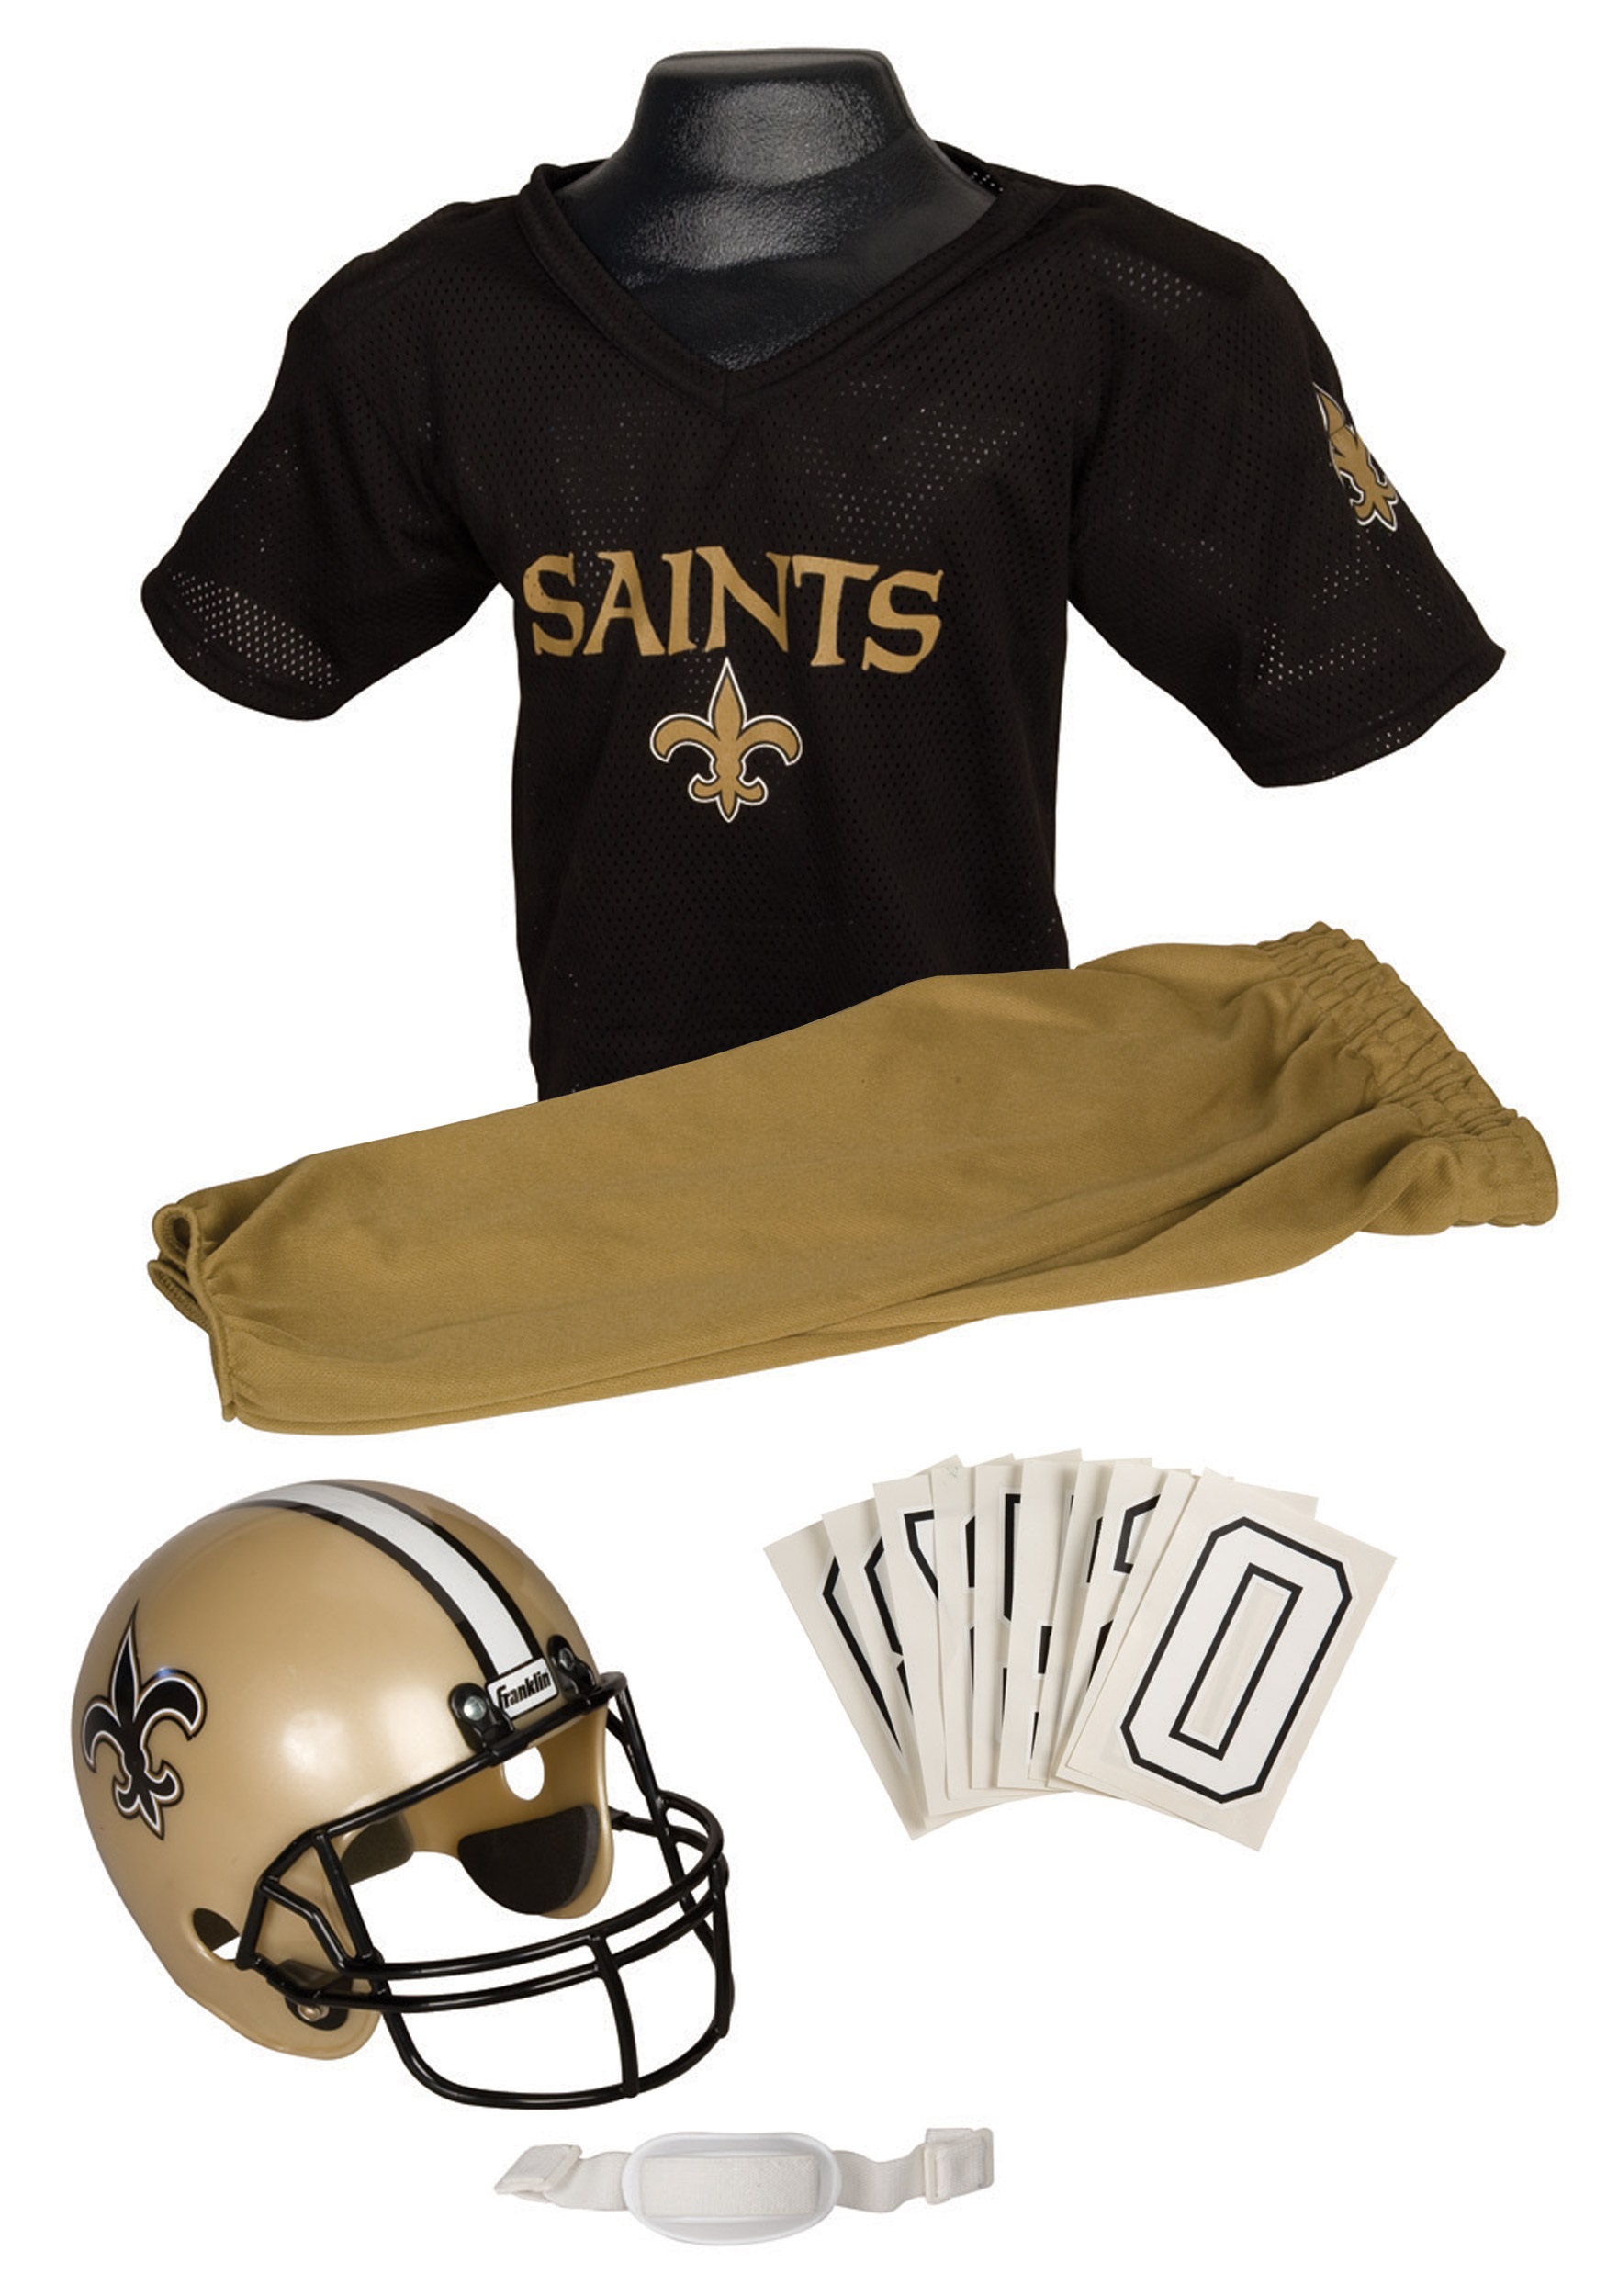 Saints NFL Uniform Kids Set